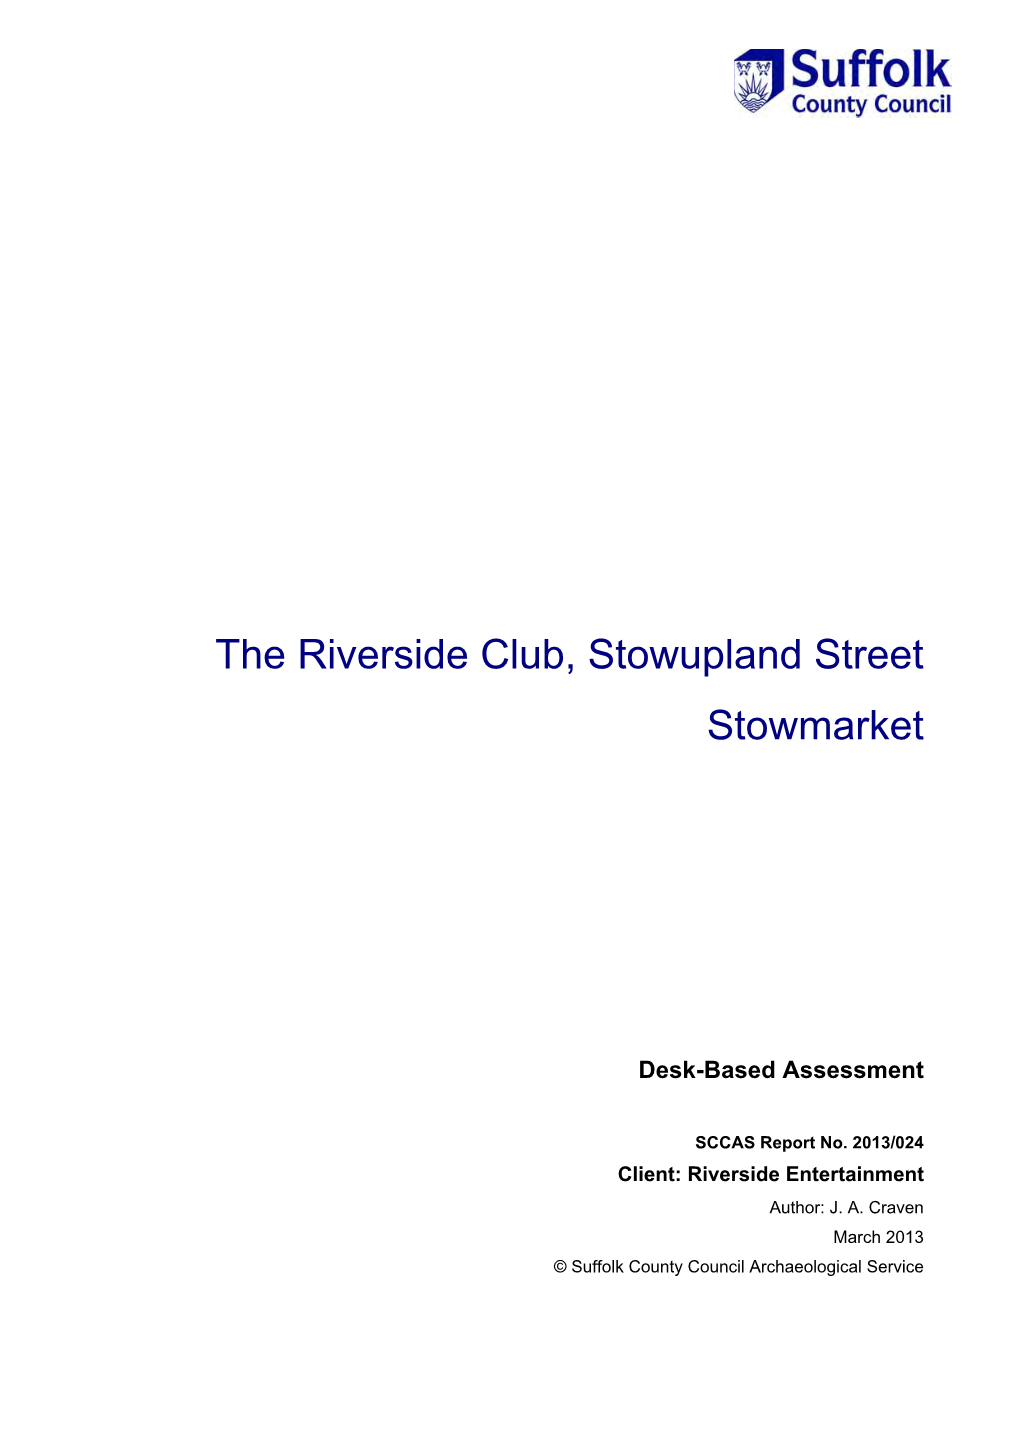 The Riverside Club, Stowupland Street Stowmarket